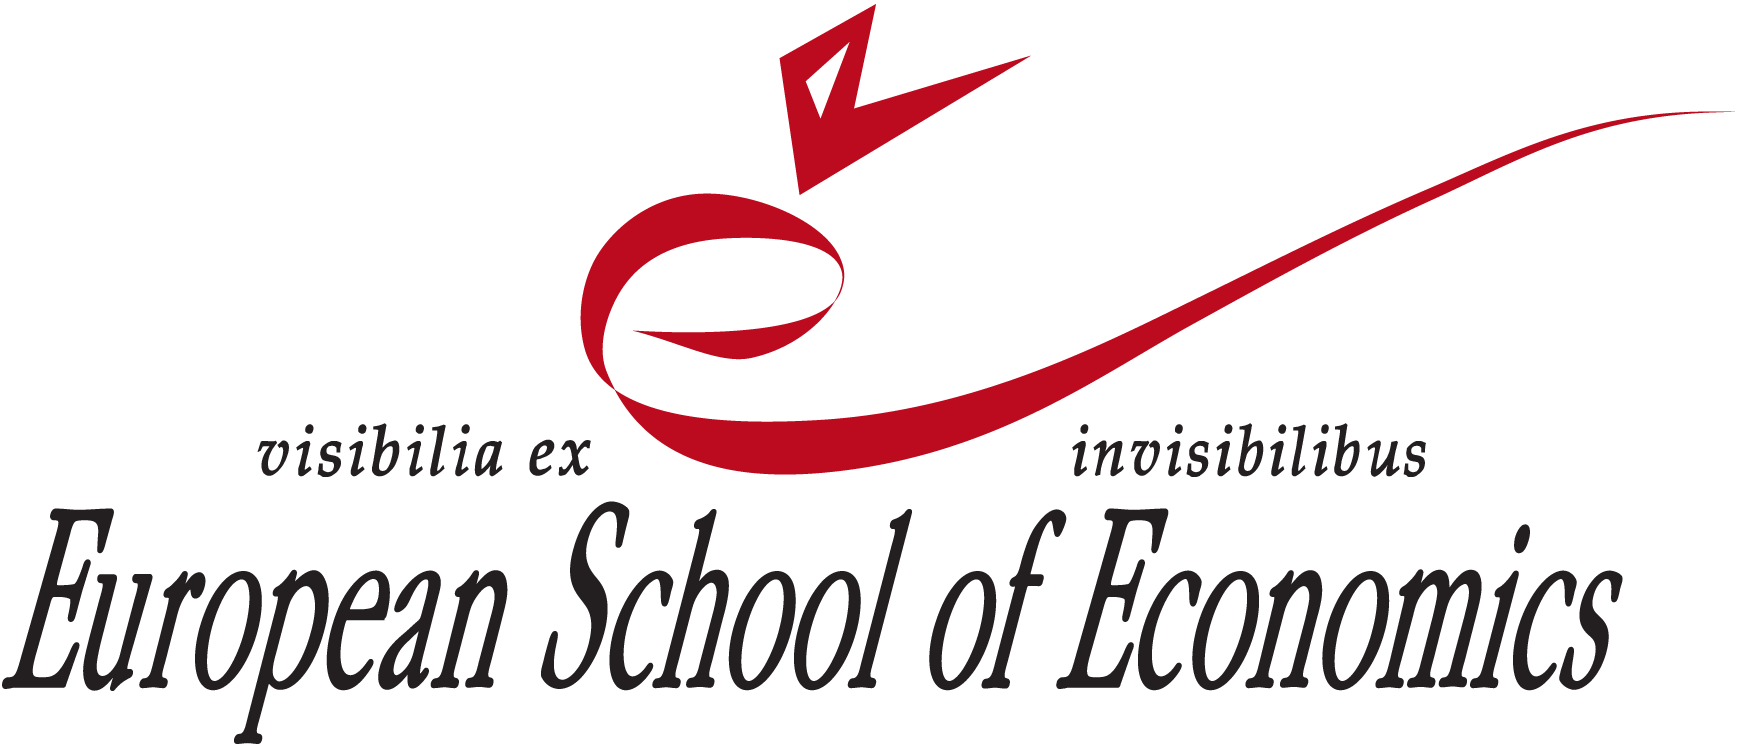 ESE Floransa ( European School of Economics ) Logo Görseli